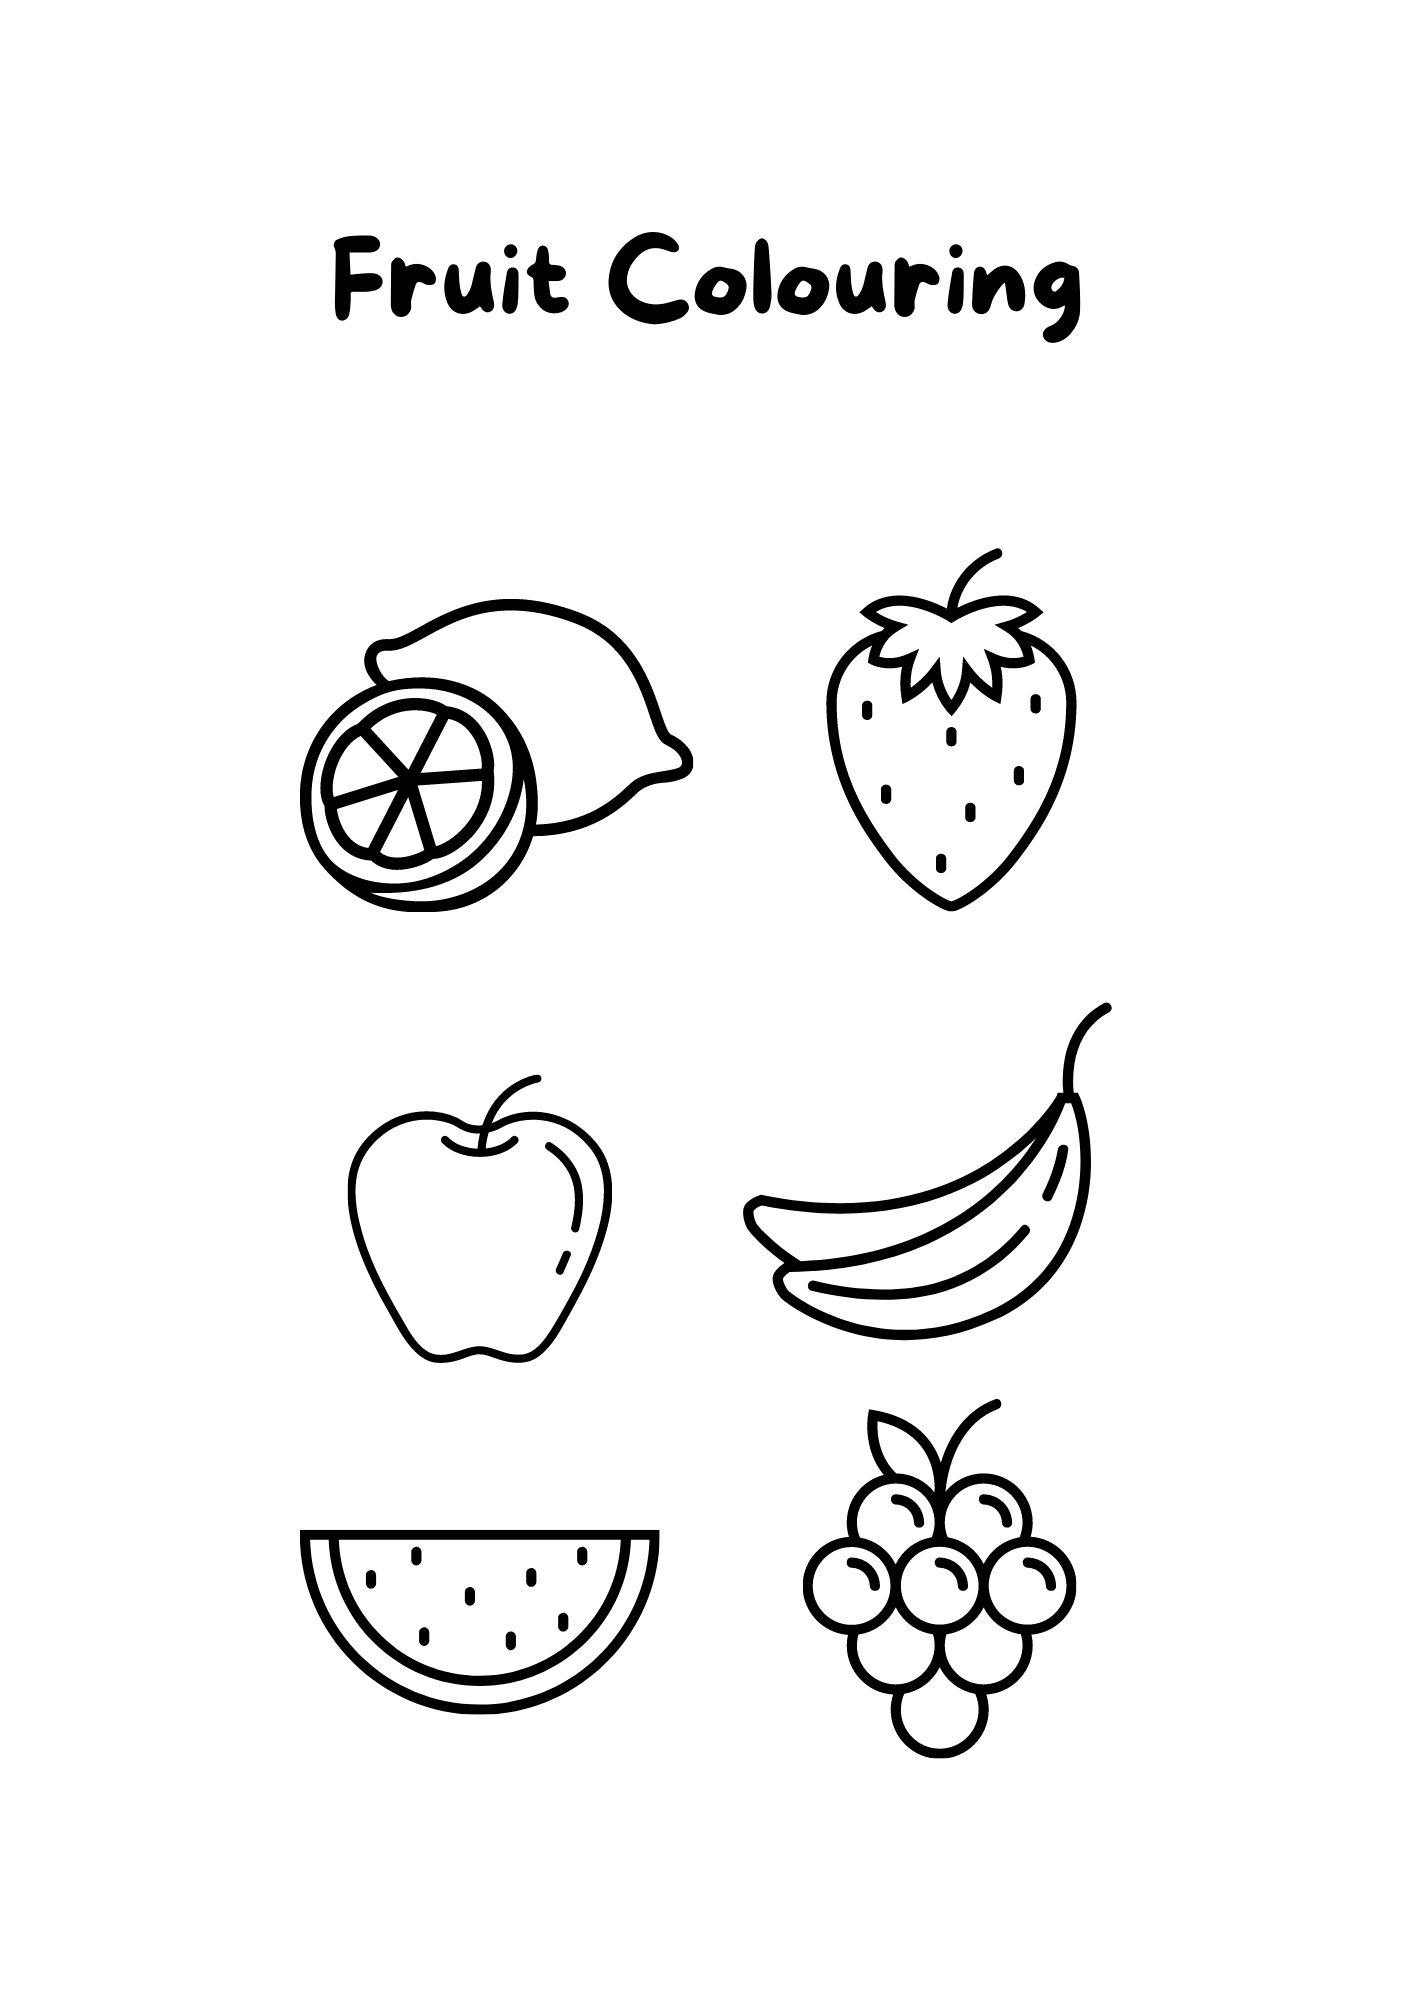 Fruit Colouring Work Sheet